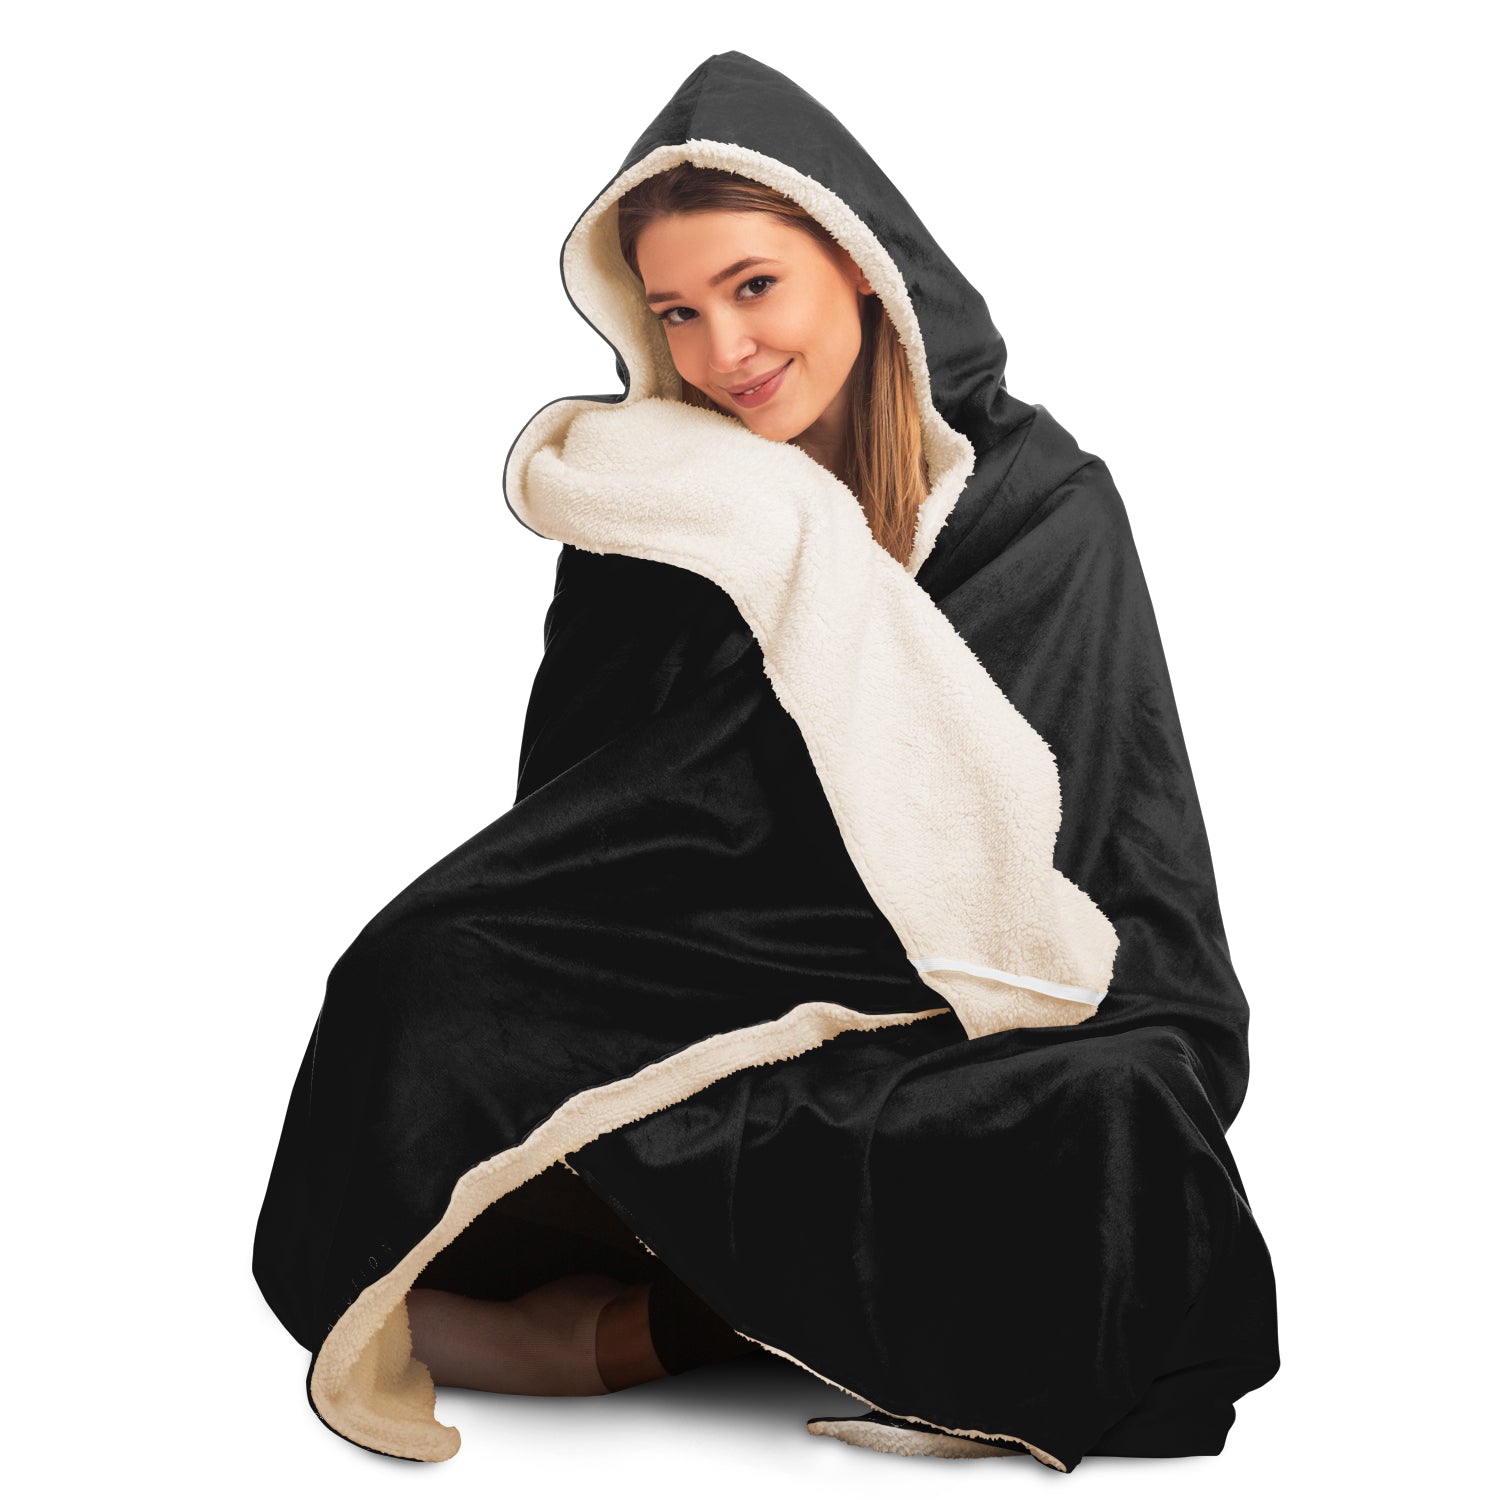 SADA Hooded Blanket - Black